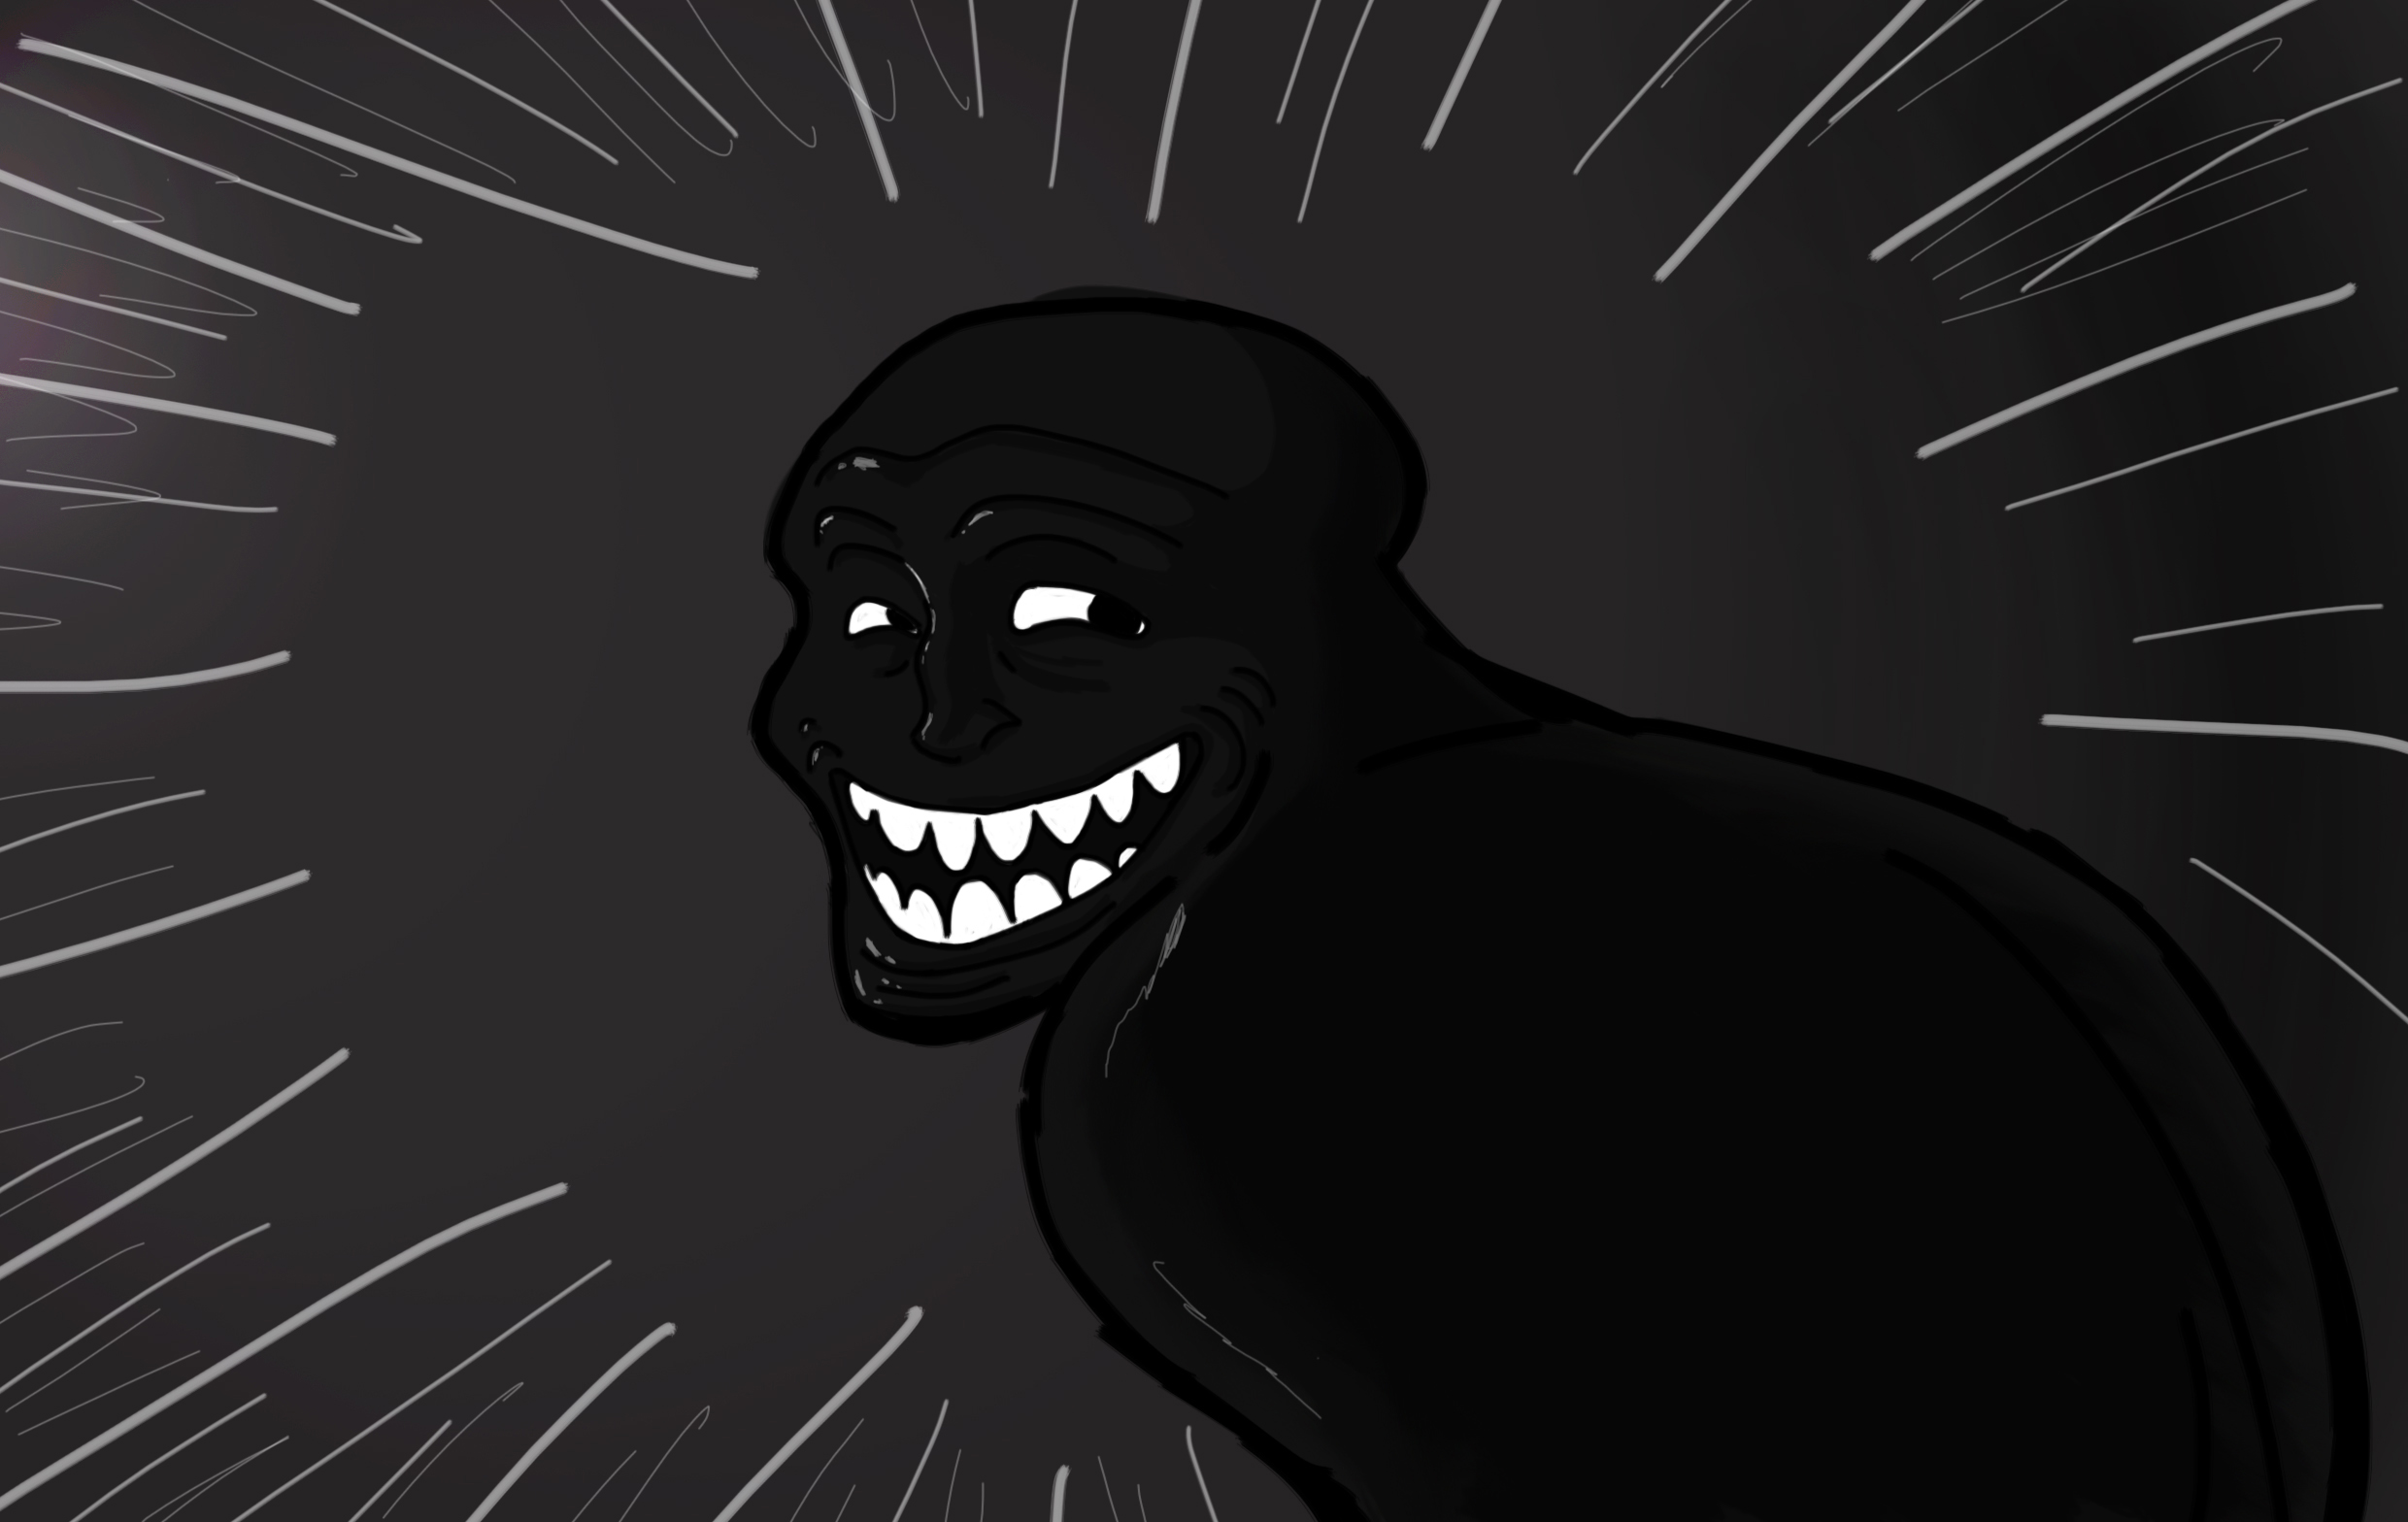 Black Troll Face by Synthetic-Goblin on DeviantArt